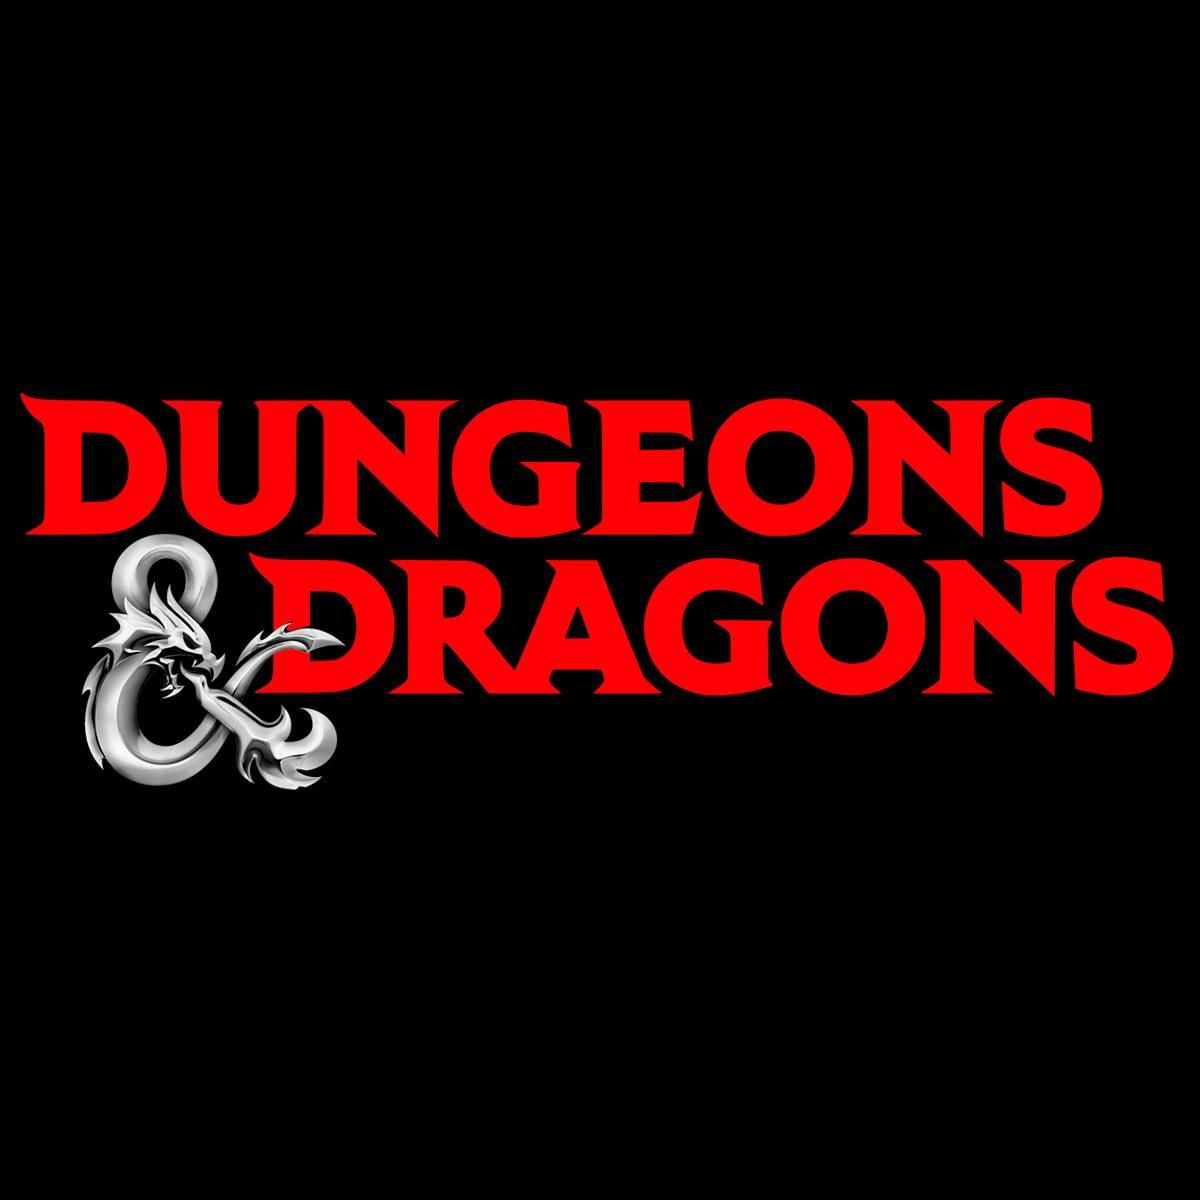 Livro Dungeons Dragons Guia de Van Richten para Ravenloft Rpg